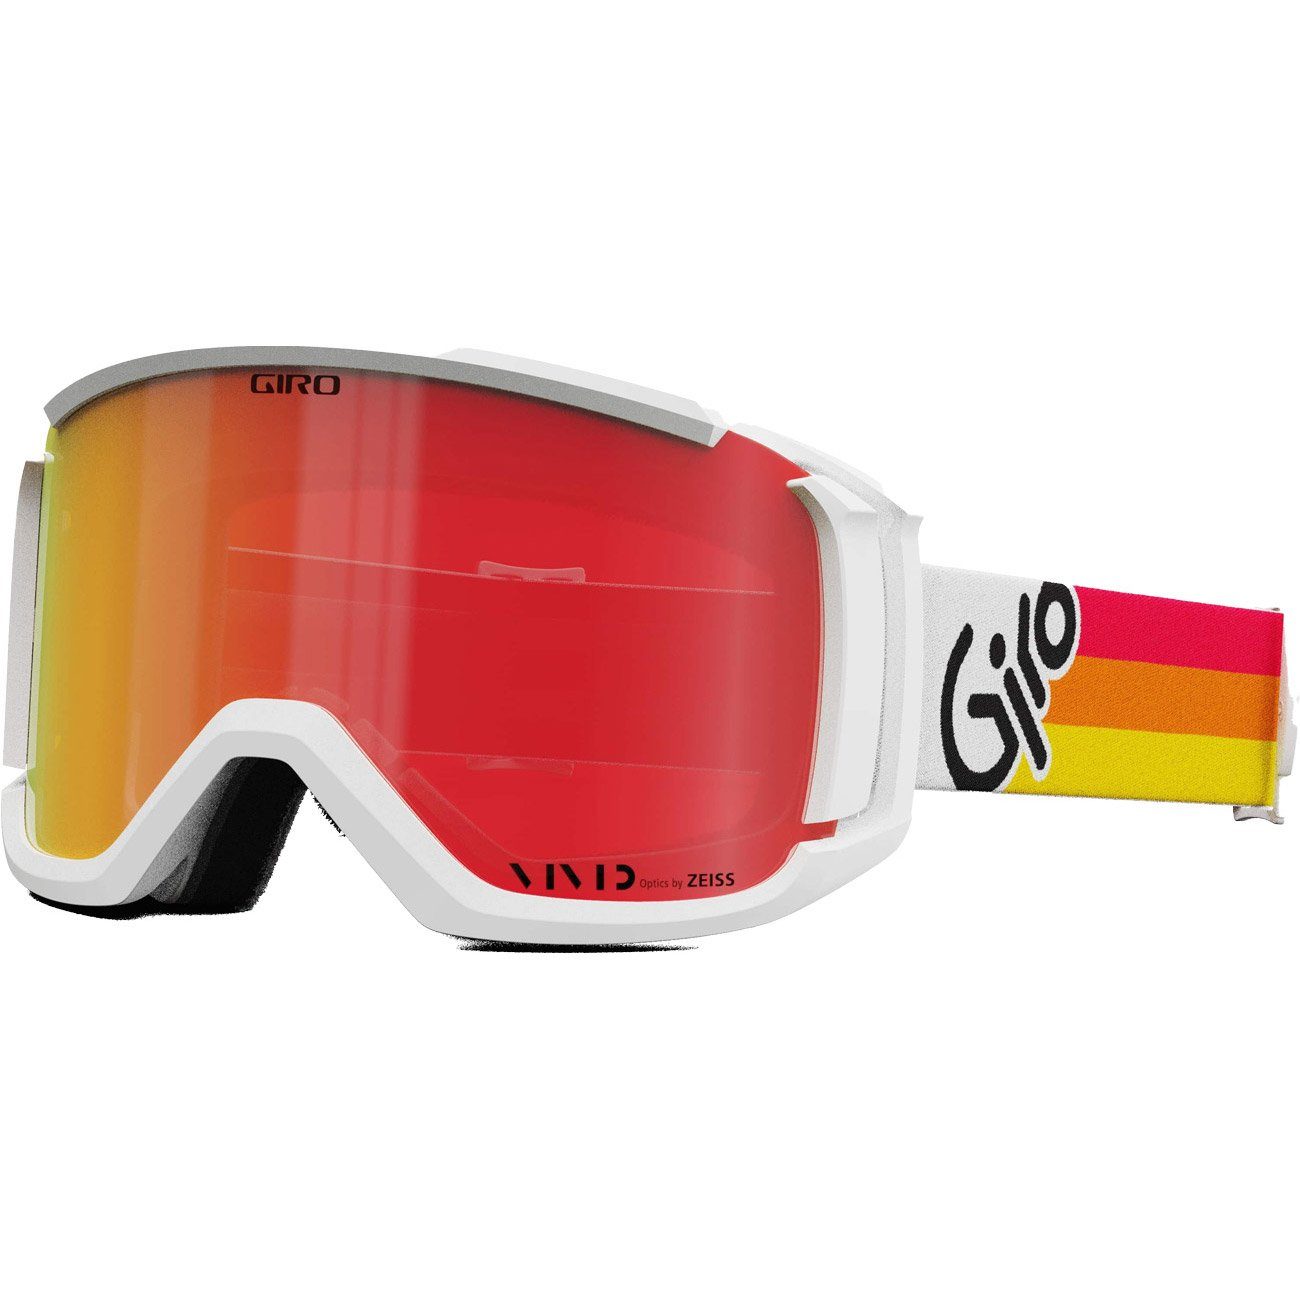 Giro Snowboardbrille, Revolt red & orange vintage // vivid ember